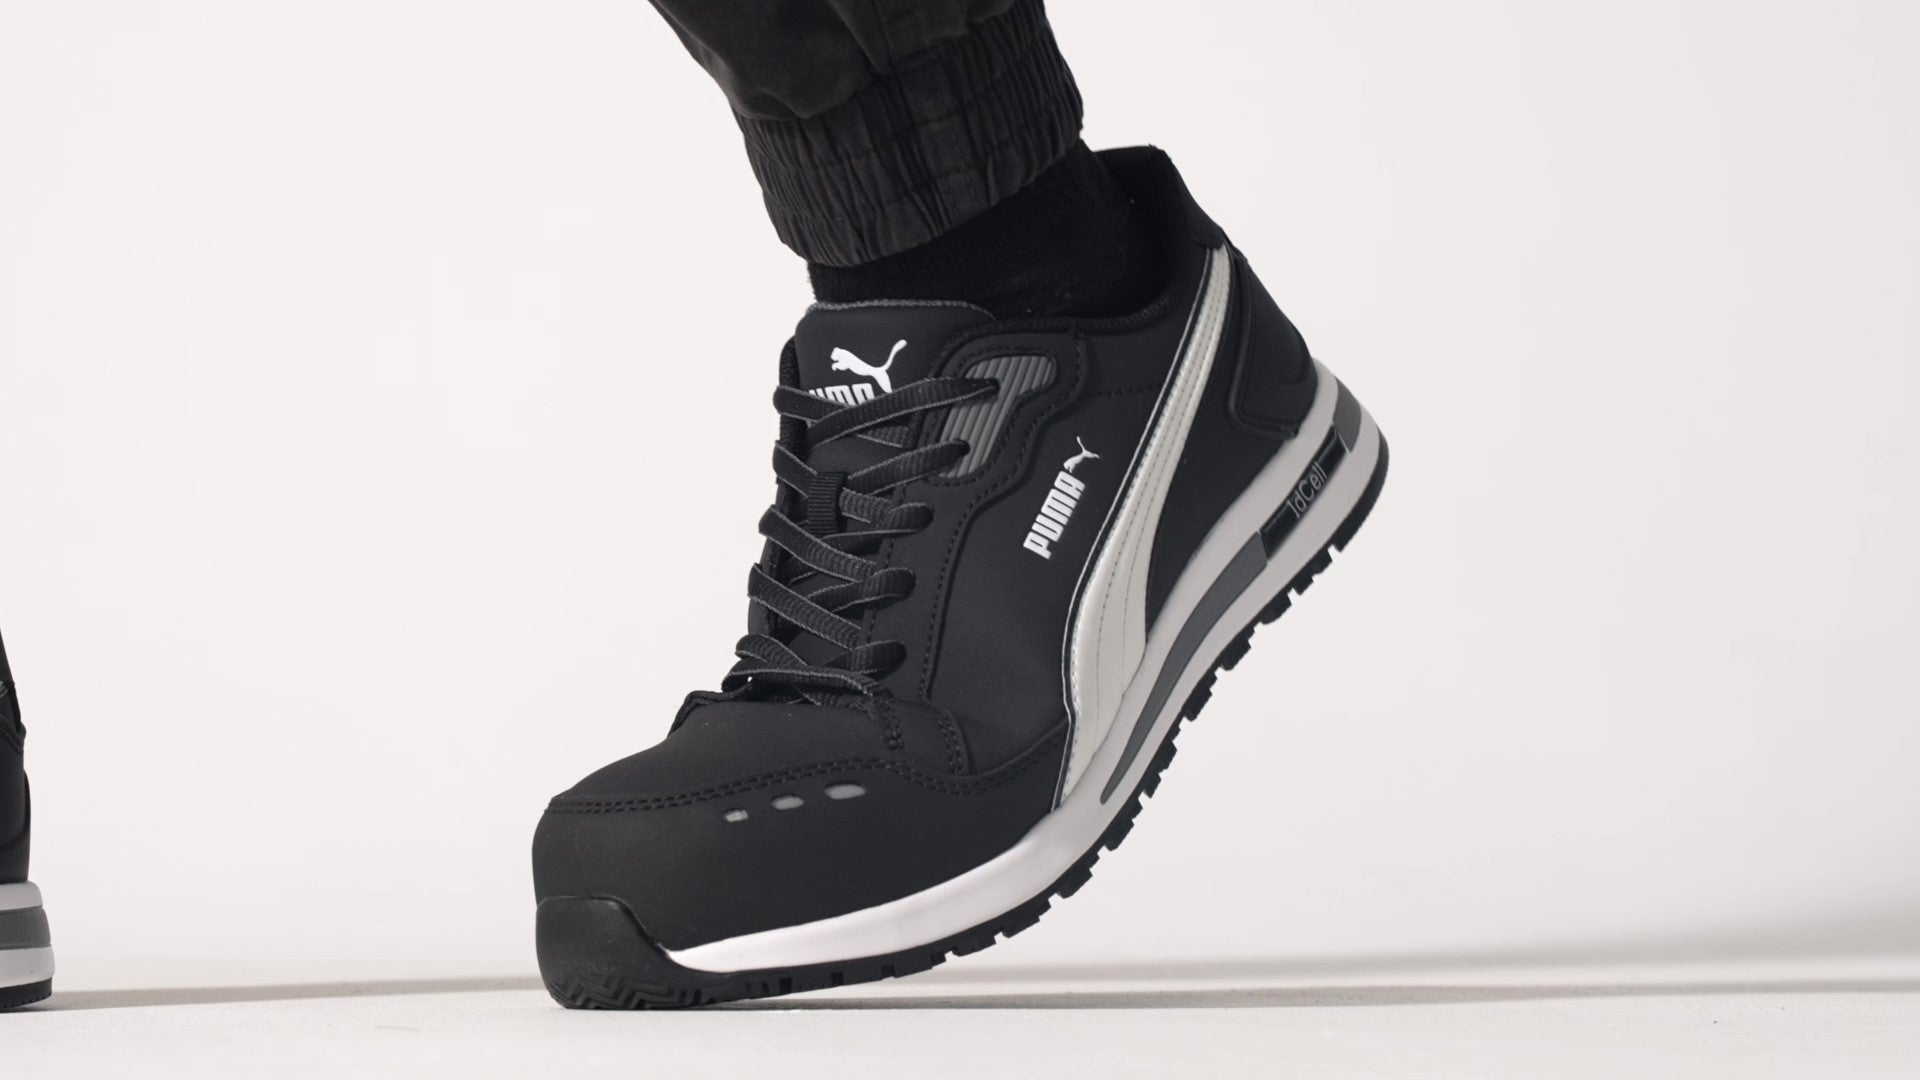 Black slip resistant shoe with composite toe cap (200 joules), product video.